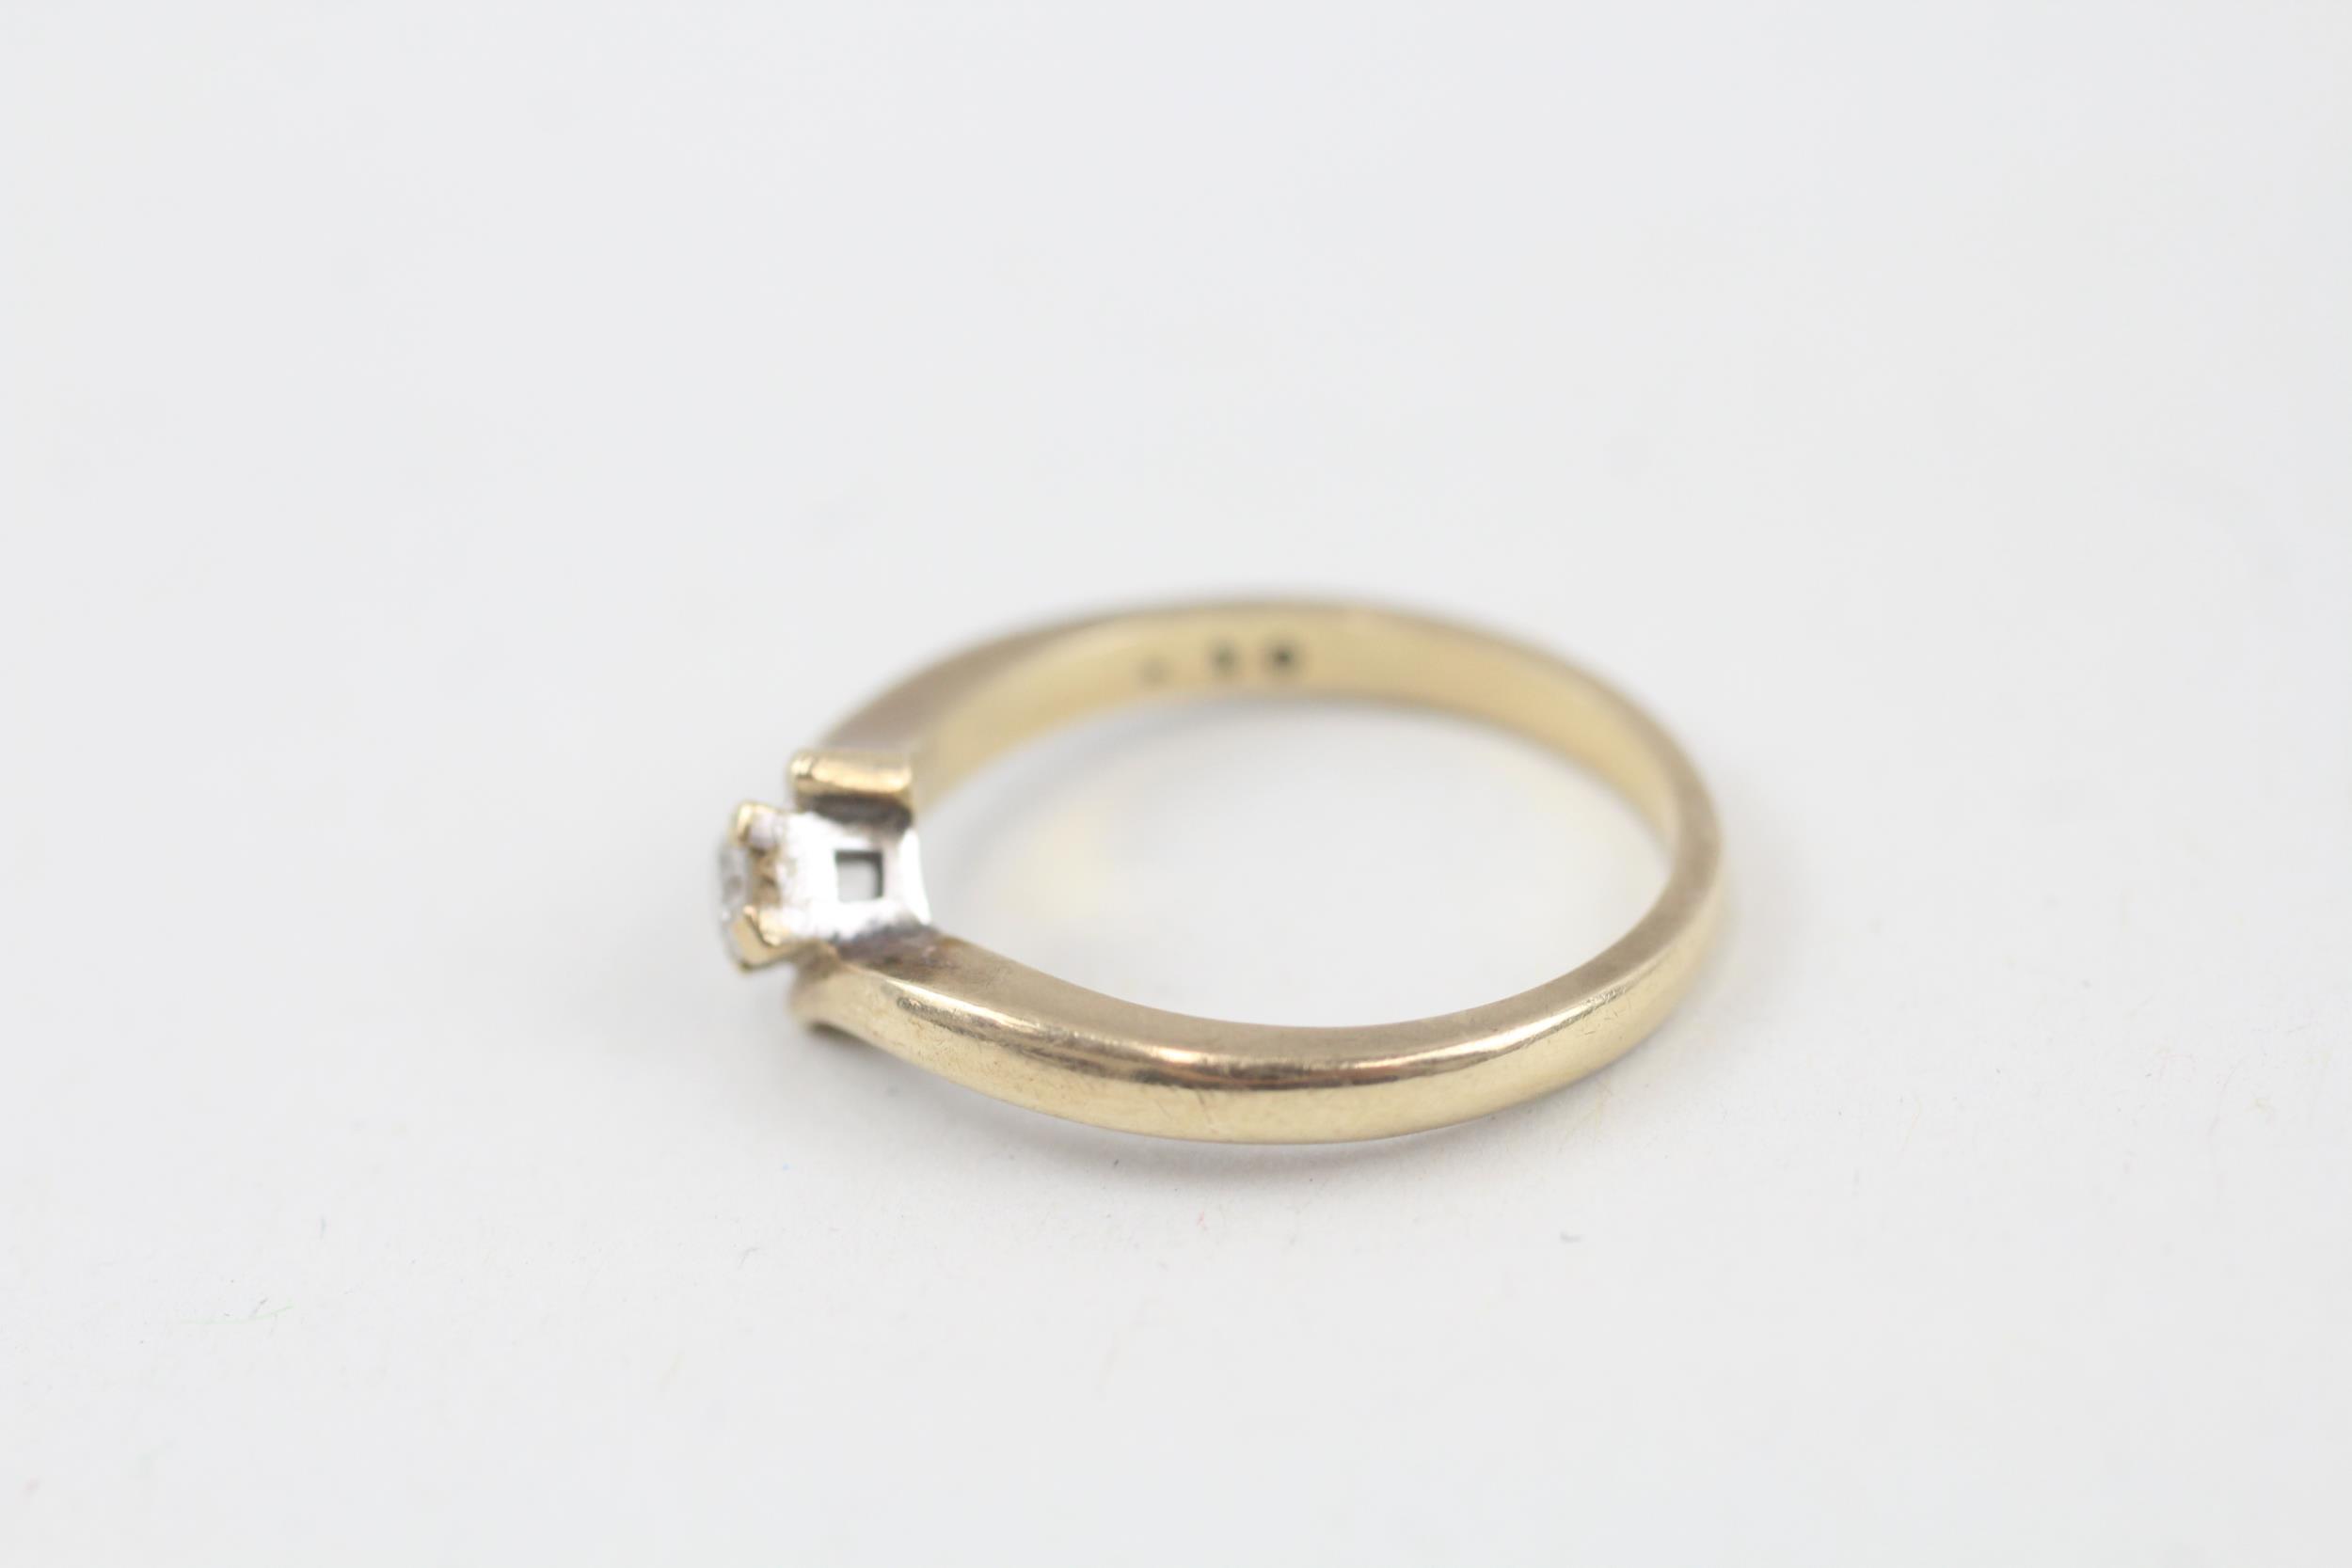 9ct gold circular cut diamond single stone ring Size M - 2.6 g - Image 3 of 7